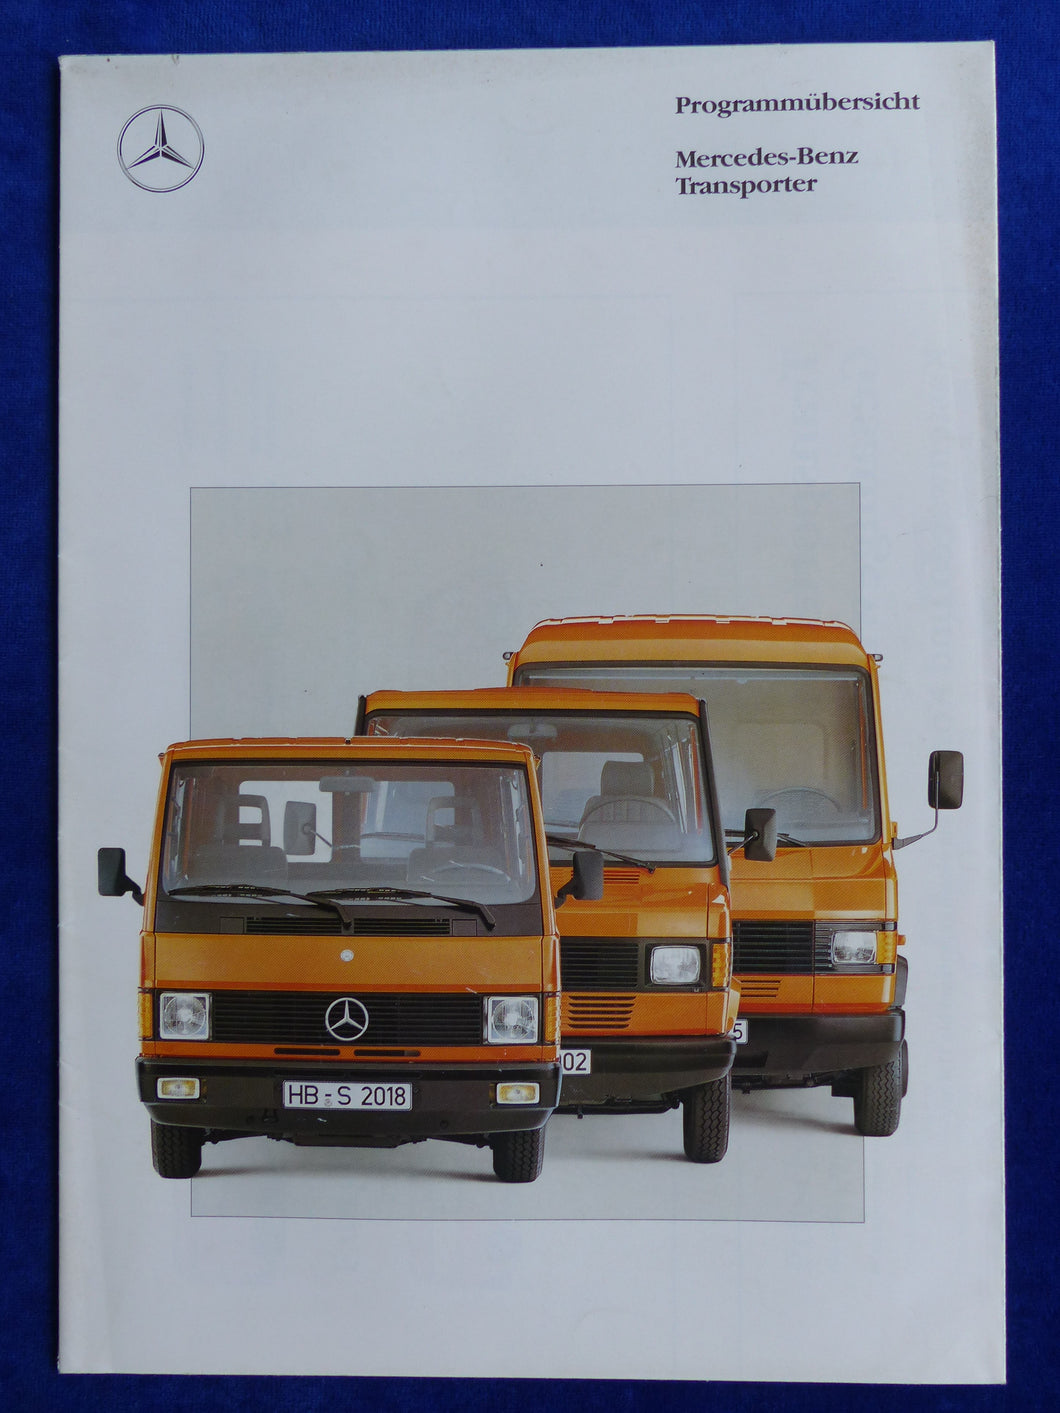 Mercedes-Benz Transporter Programmübersicht - Poster Prospekt Brochure 04.1991